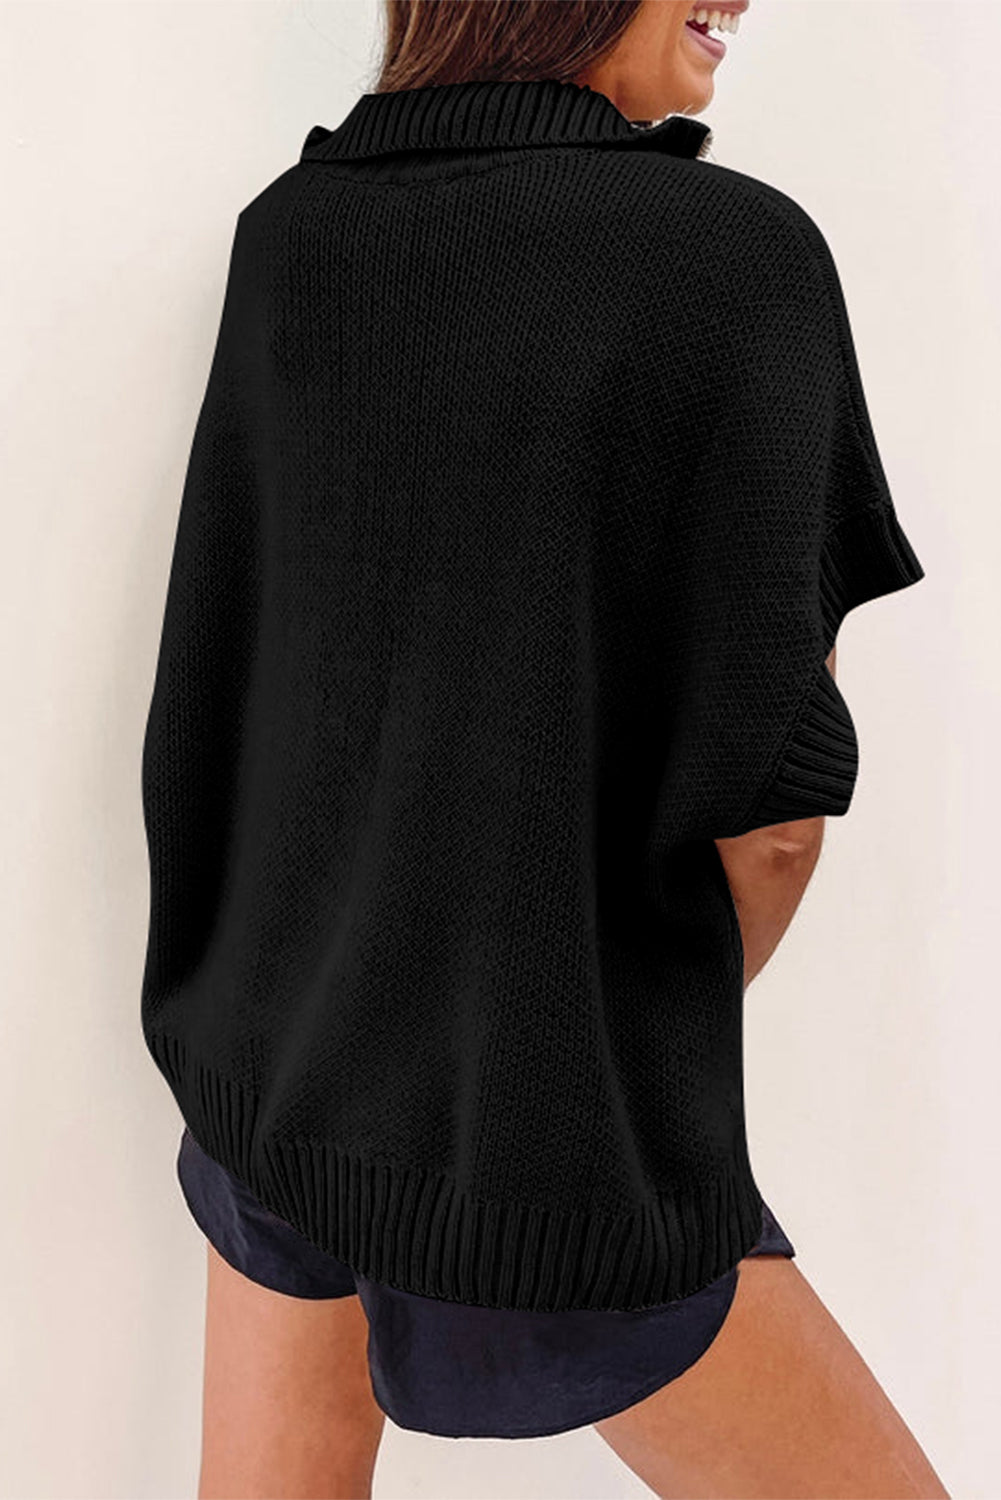 Crni džemper s patentnim zatvaračem i kratak šišmiš rukav